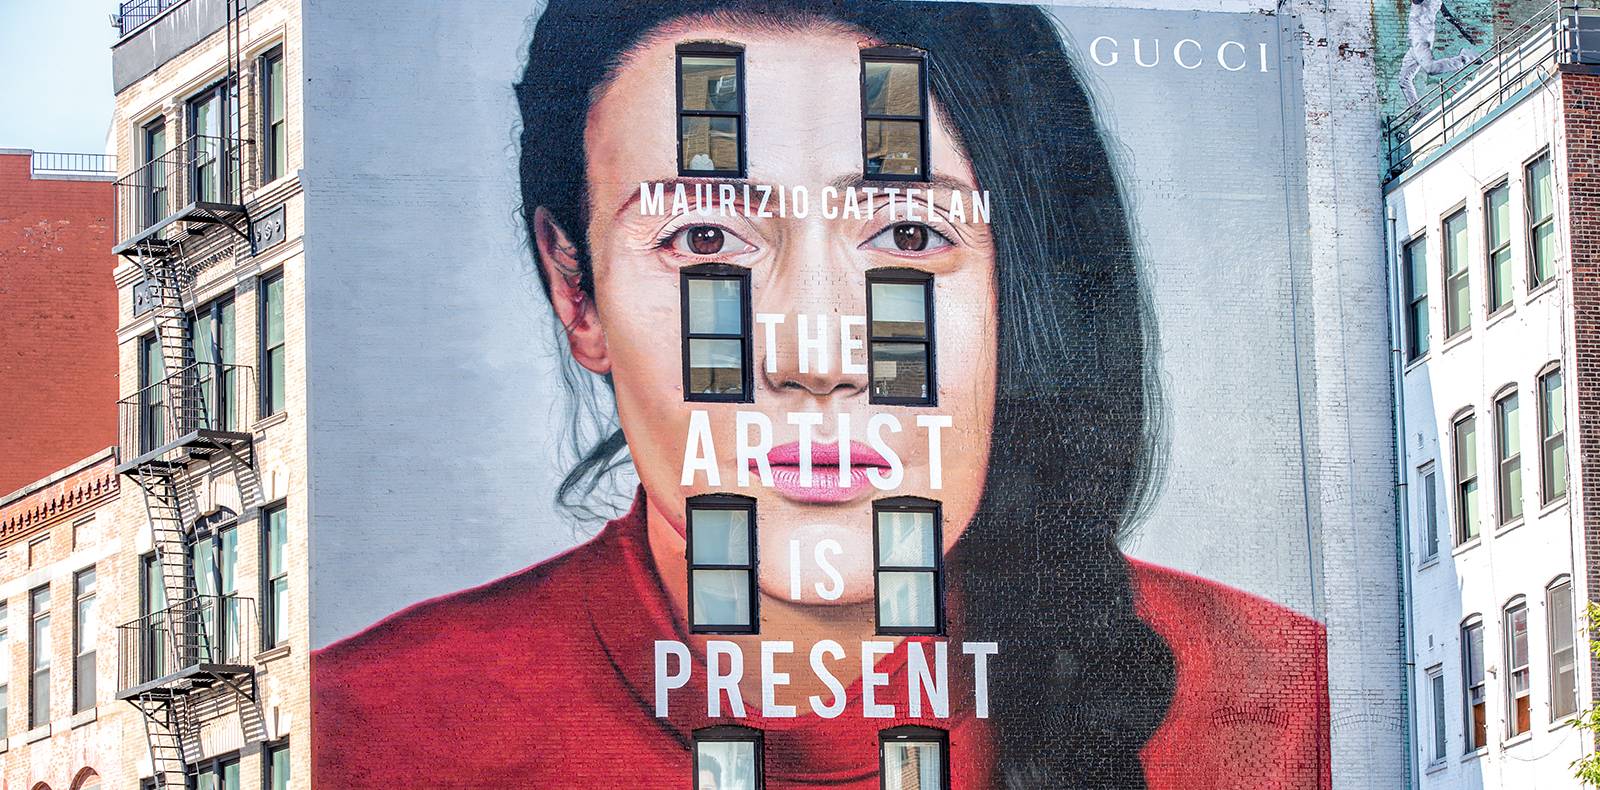 Gucci announces Maurizio Cattelan for its latest “art wall” | Numéro  Magazine